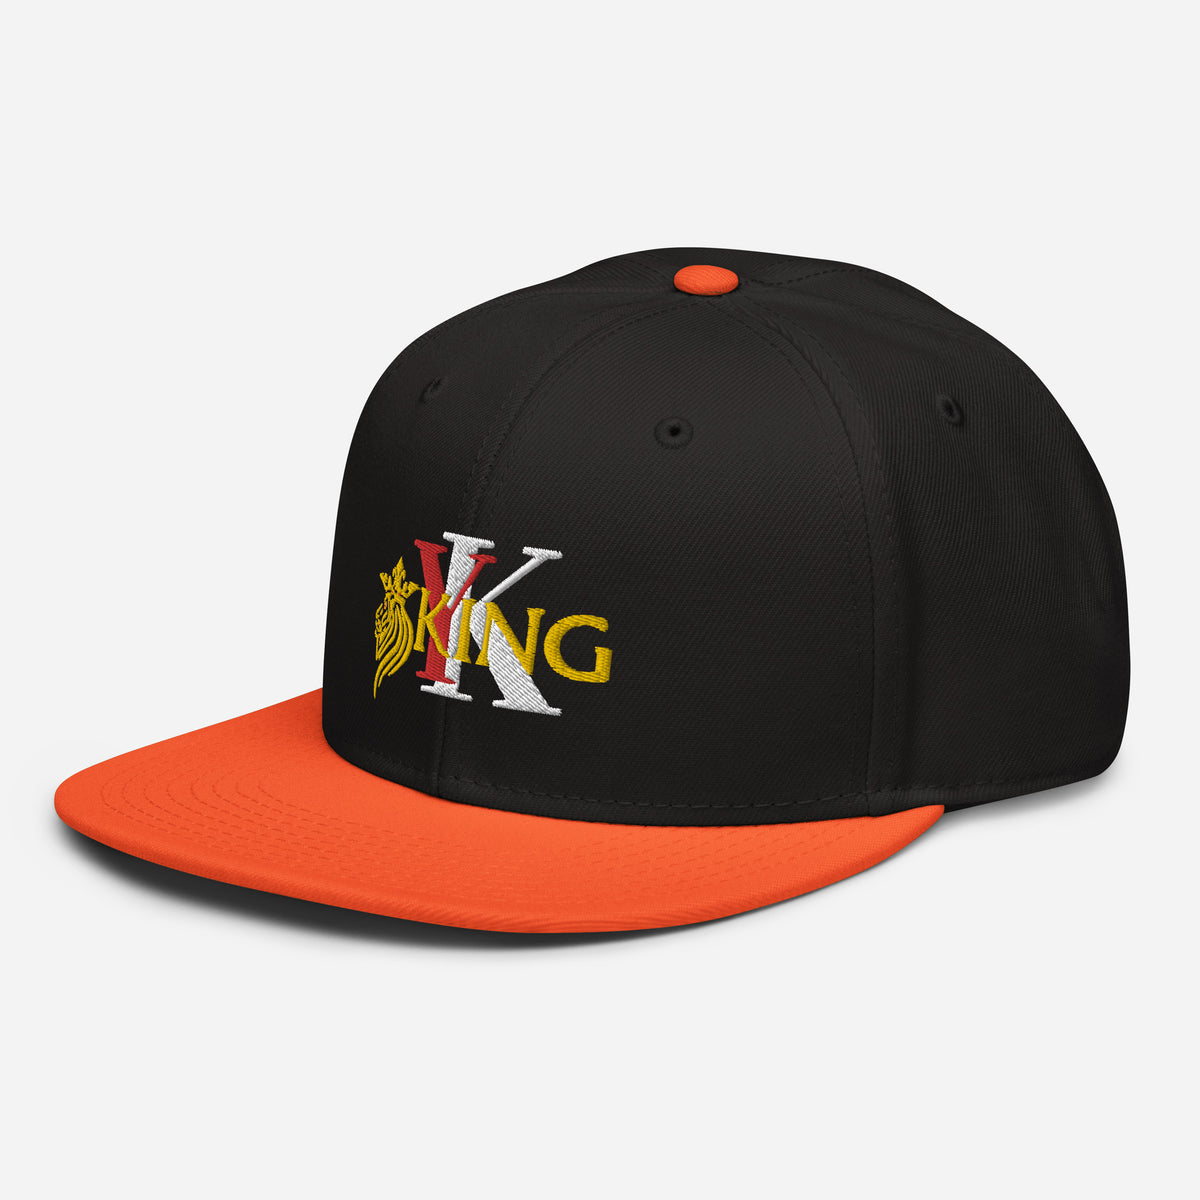 Young Kingsman Snapback Hat's